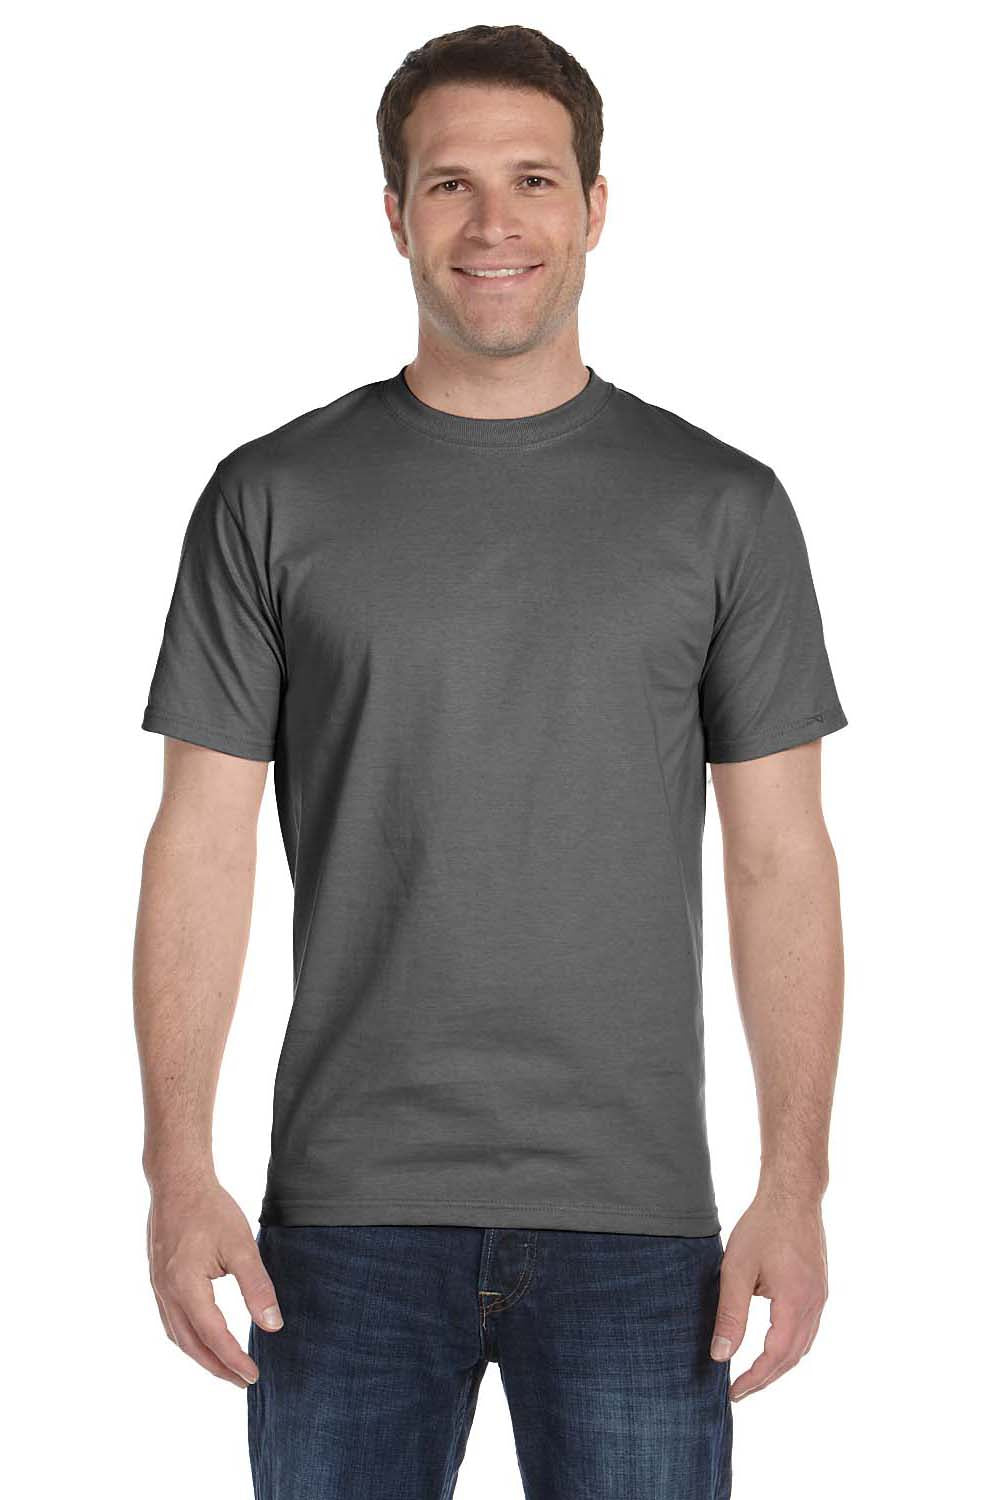 Hanes 5180 Mens Beefy-T Short Sleeve Crewneck T-Shirt Smoke Grey Front